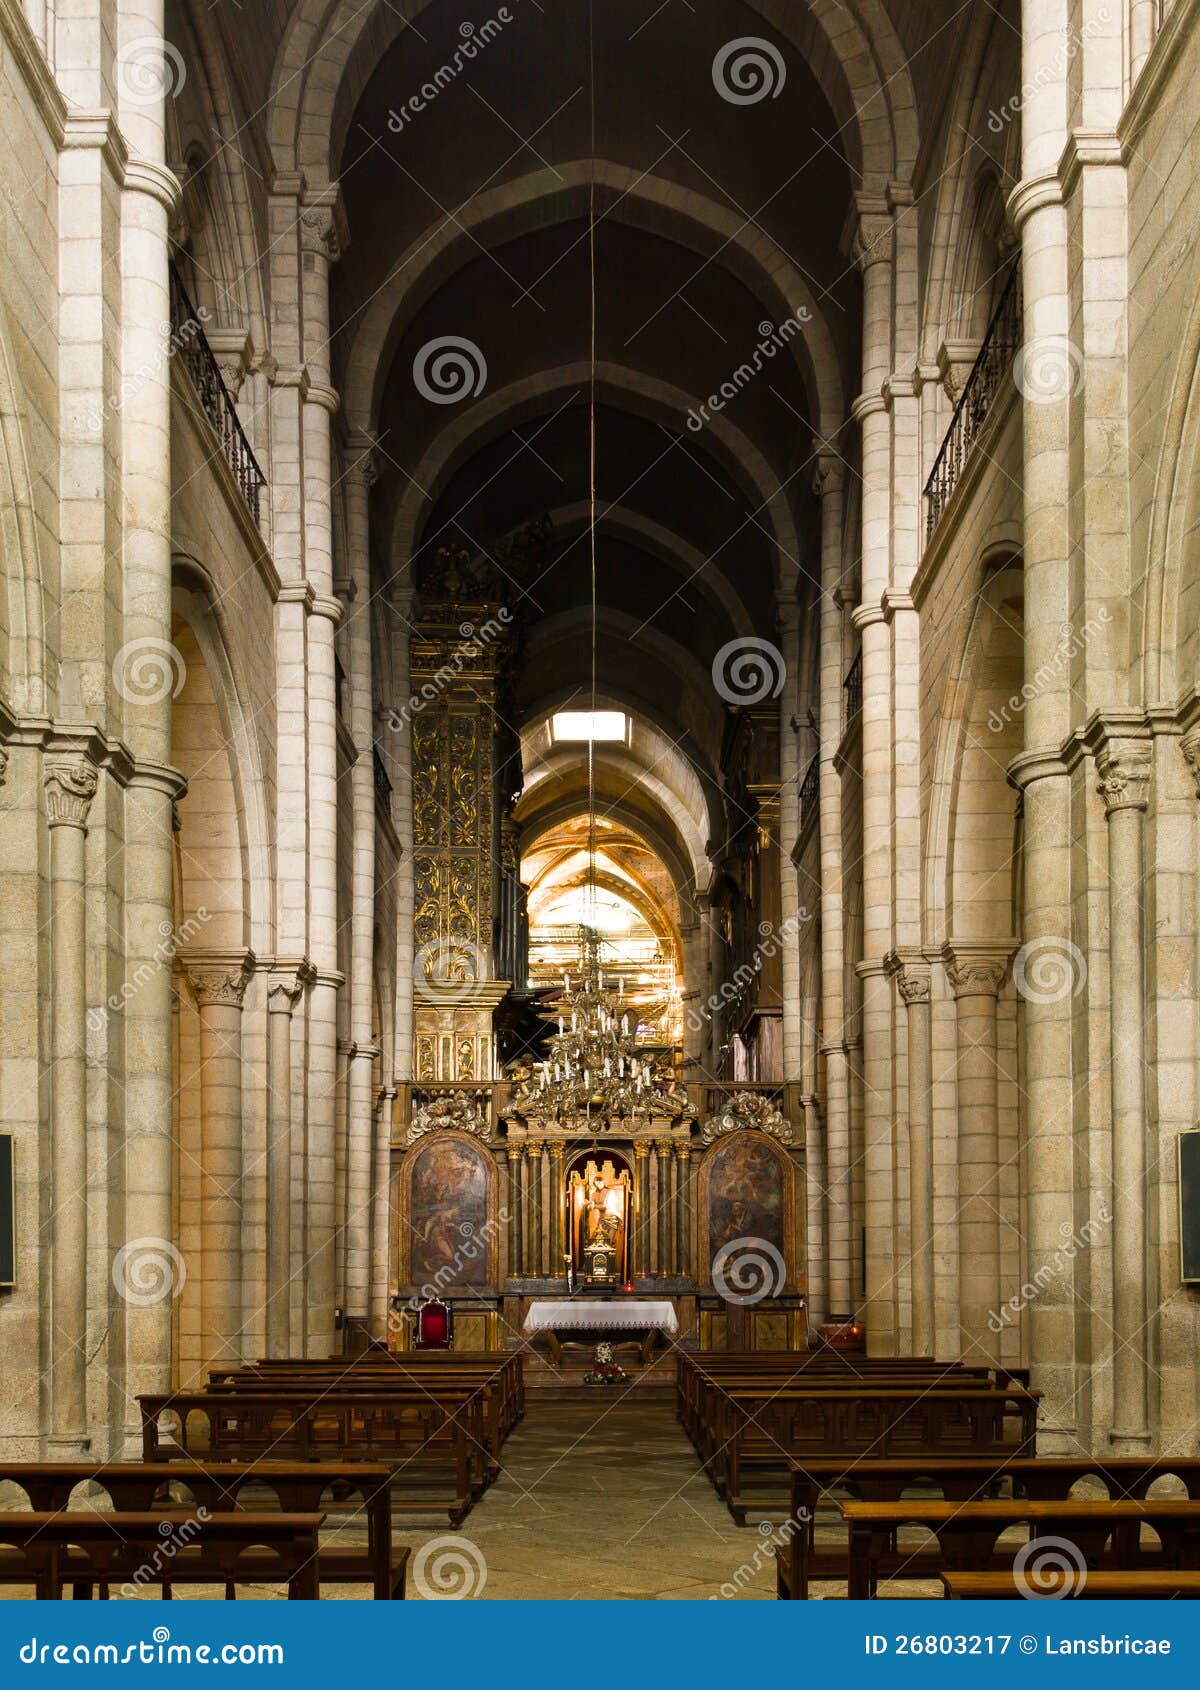 lugo romanesque cathedral